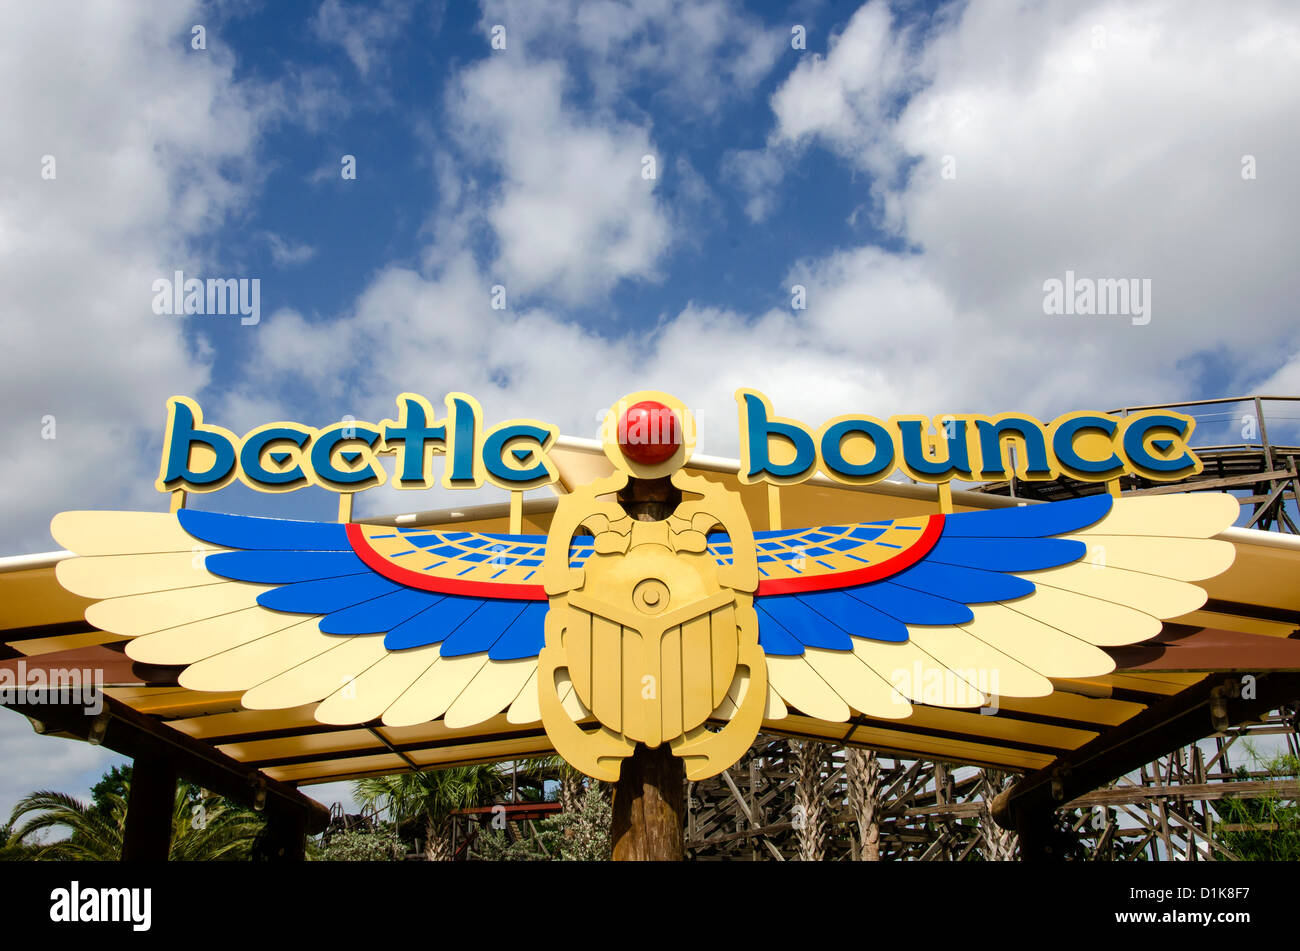 Legoland Florida Beetle Bounce ride with Egyptian design, Winter Haven, FL Stock Photo